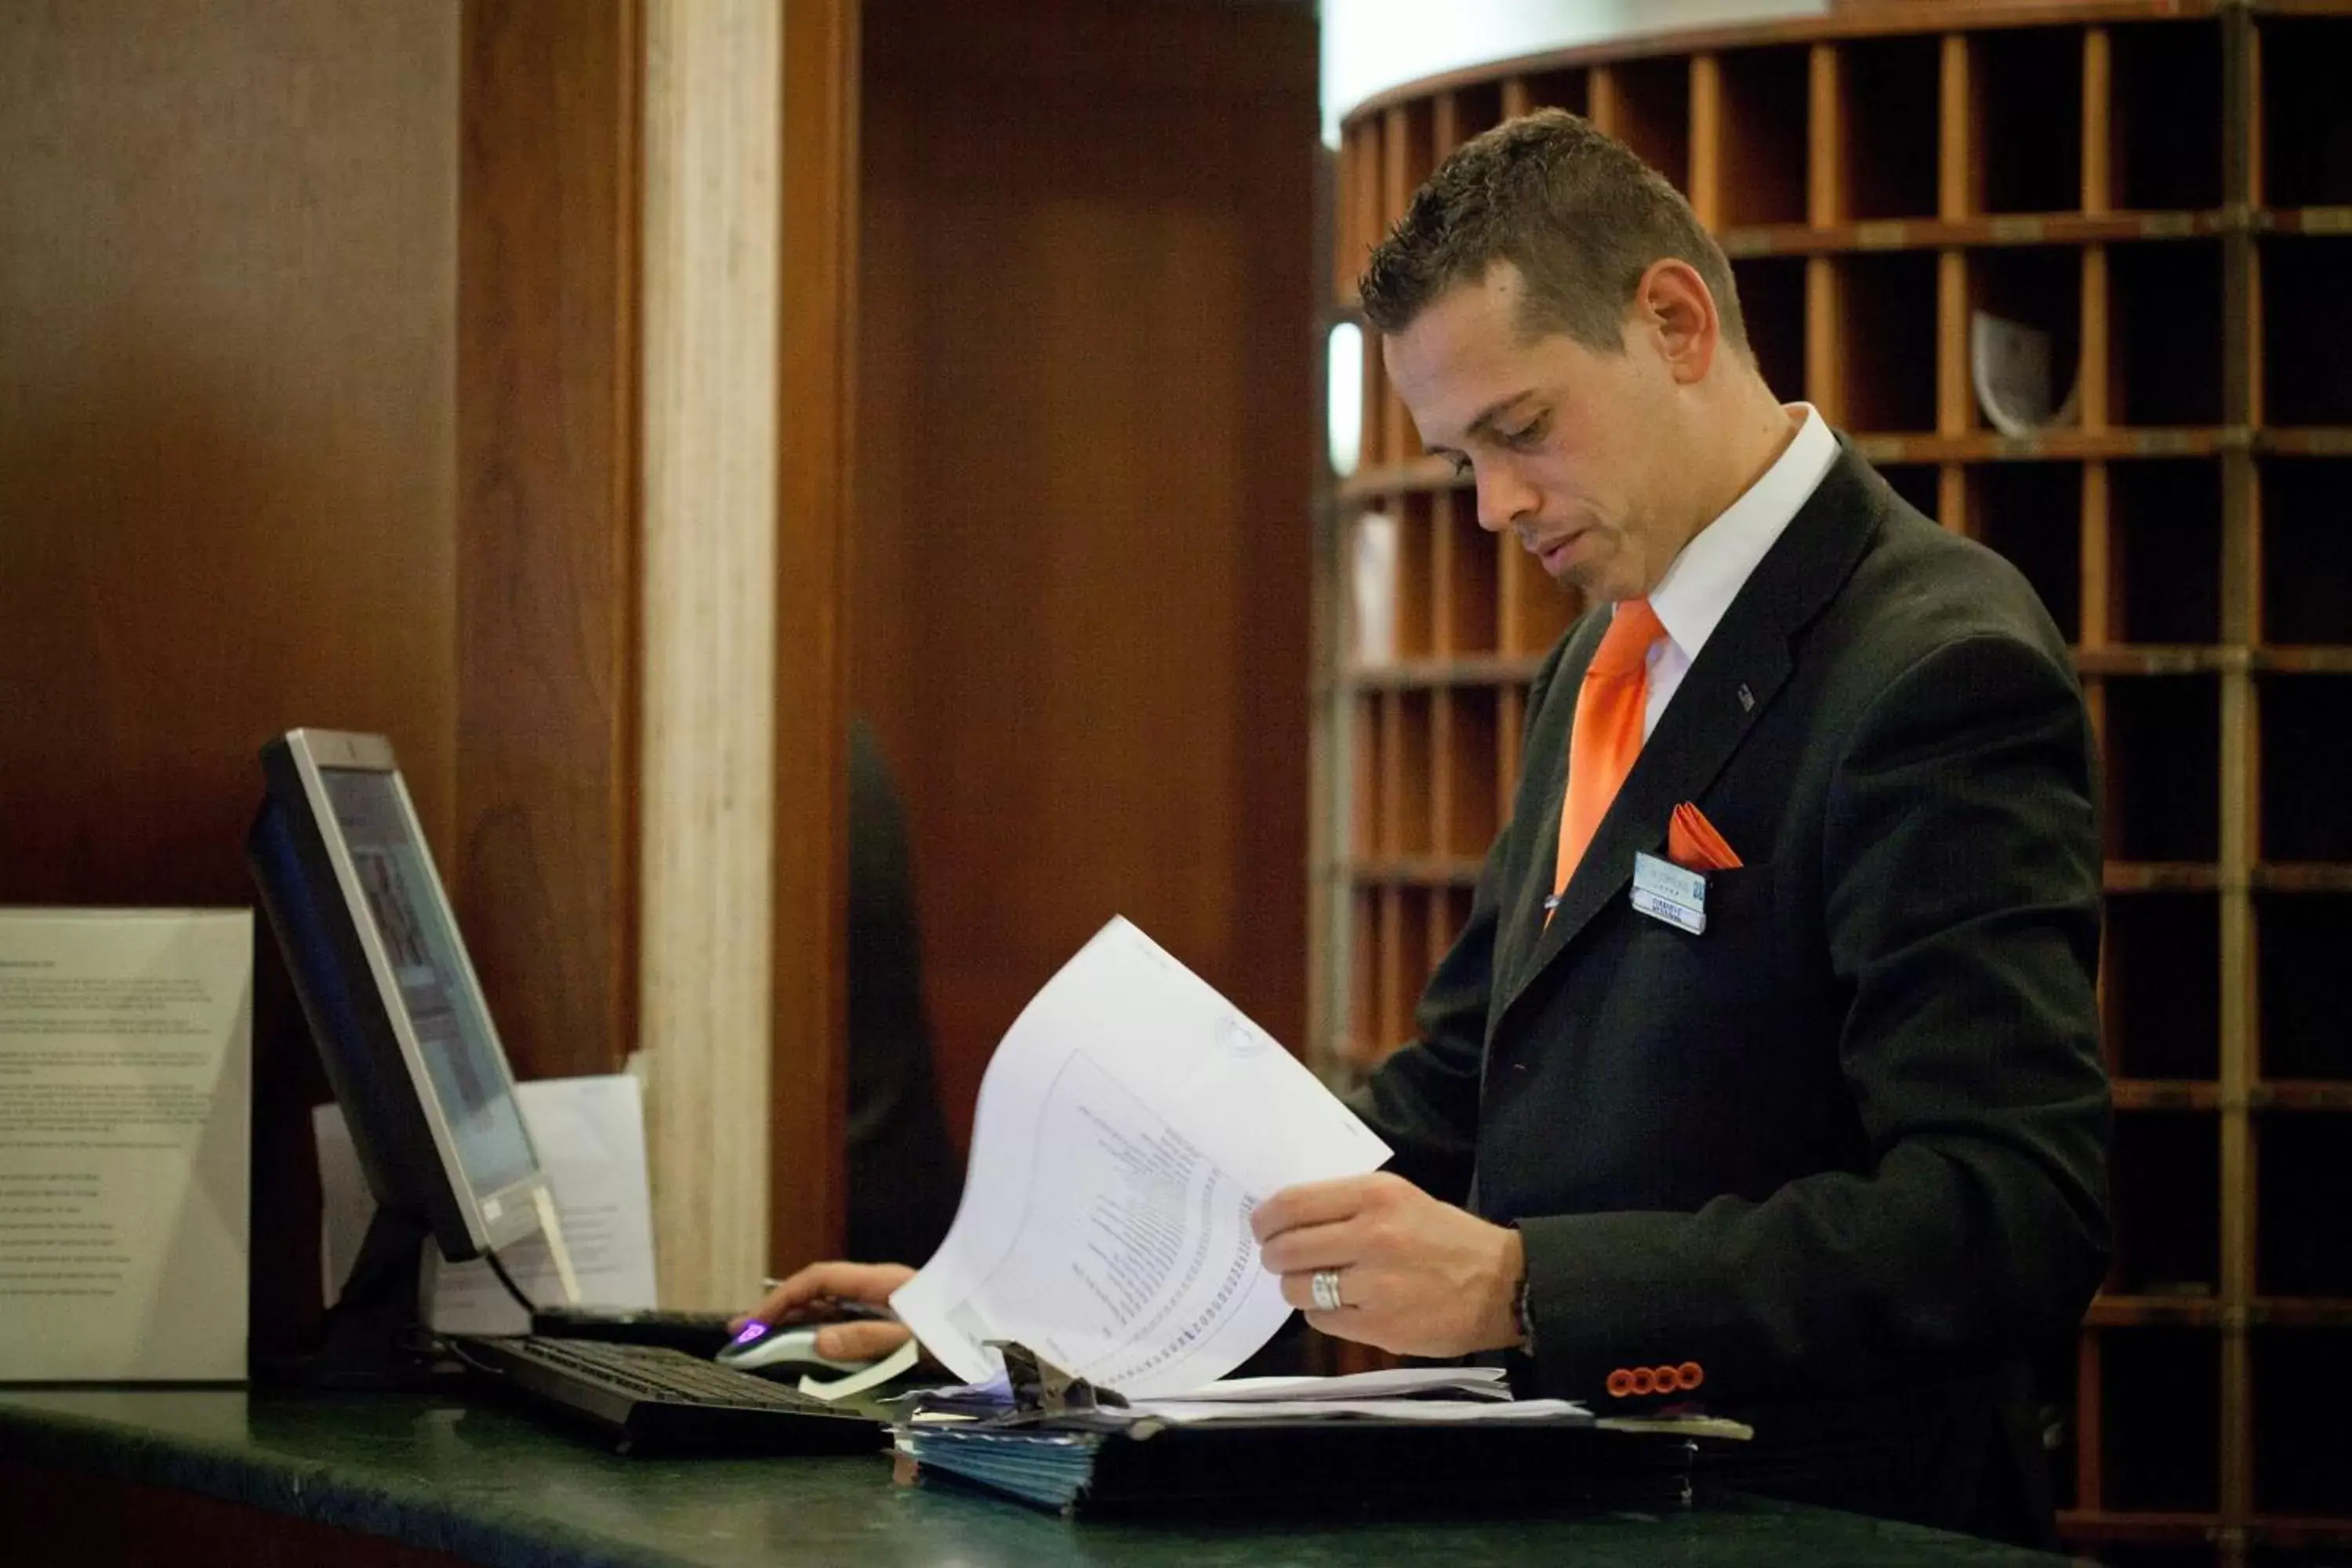 Staff in iH Hotels Roma Cicerone